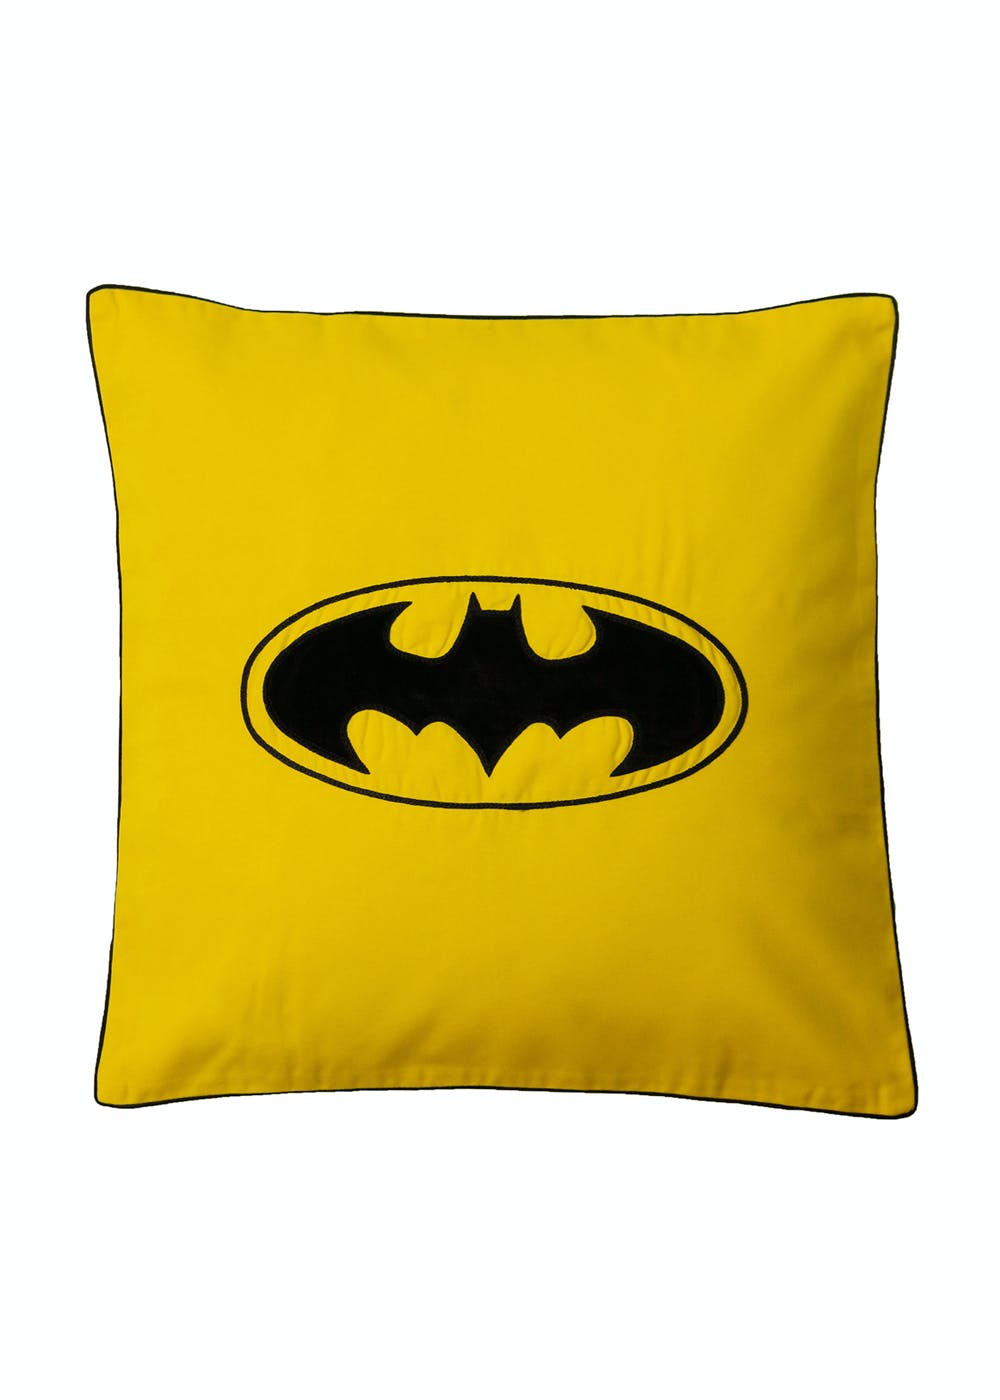 Get Batman (Yellow) Cushion Cover at ₹ 399 | LBB Shop